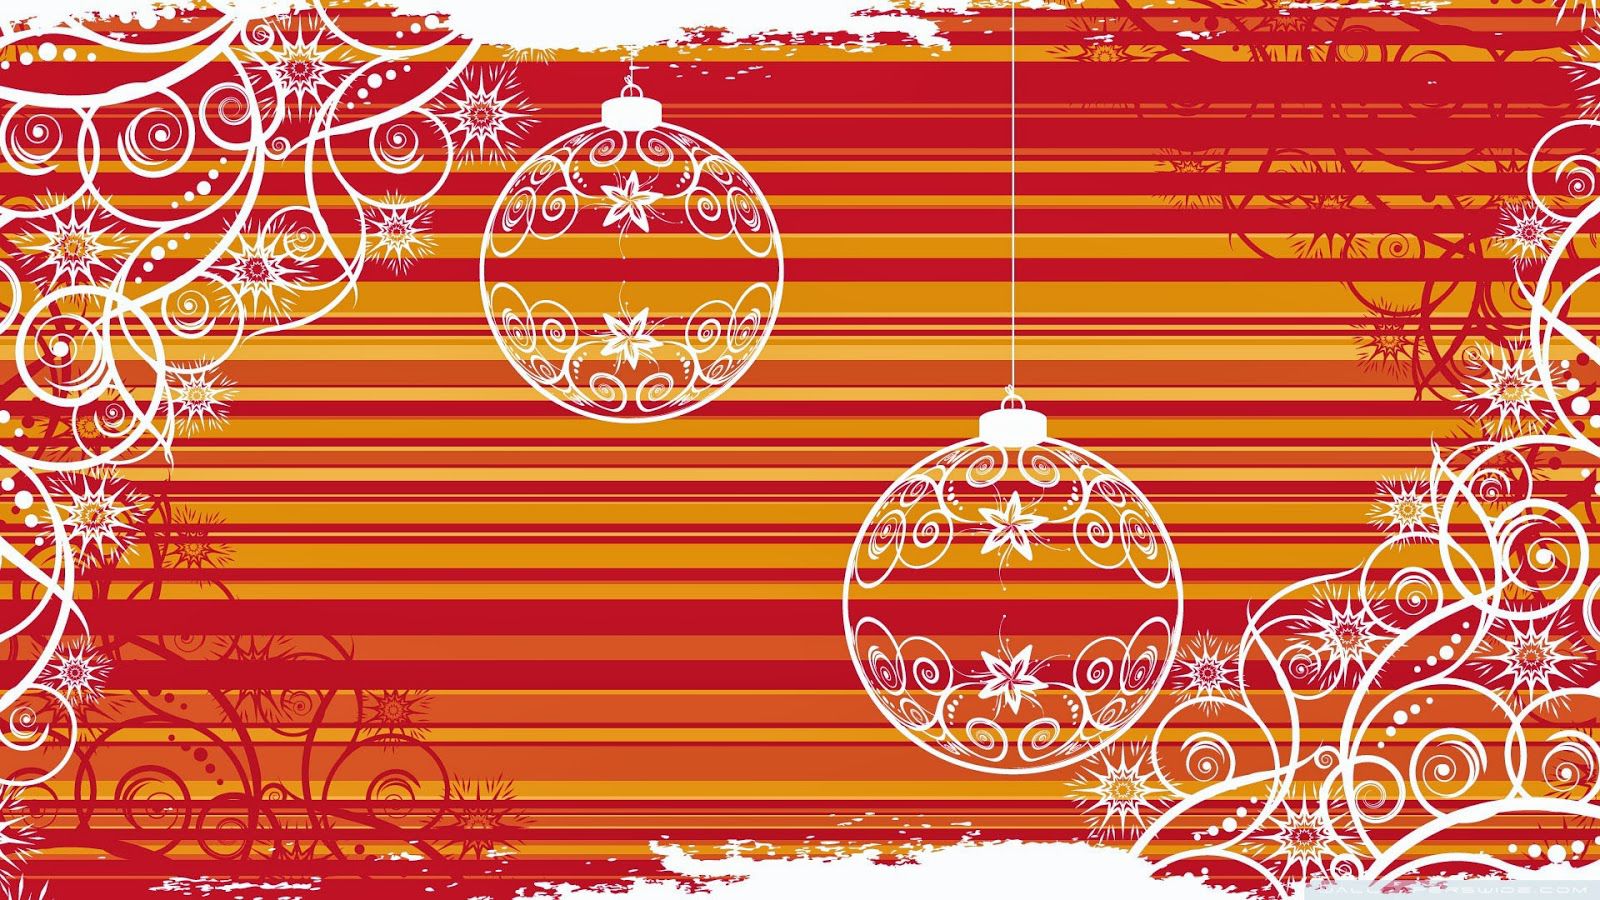 merry_christmas_3-wallpaper-1920x1080